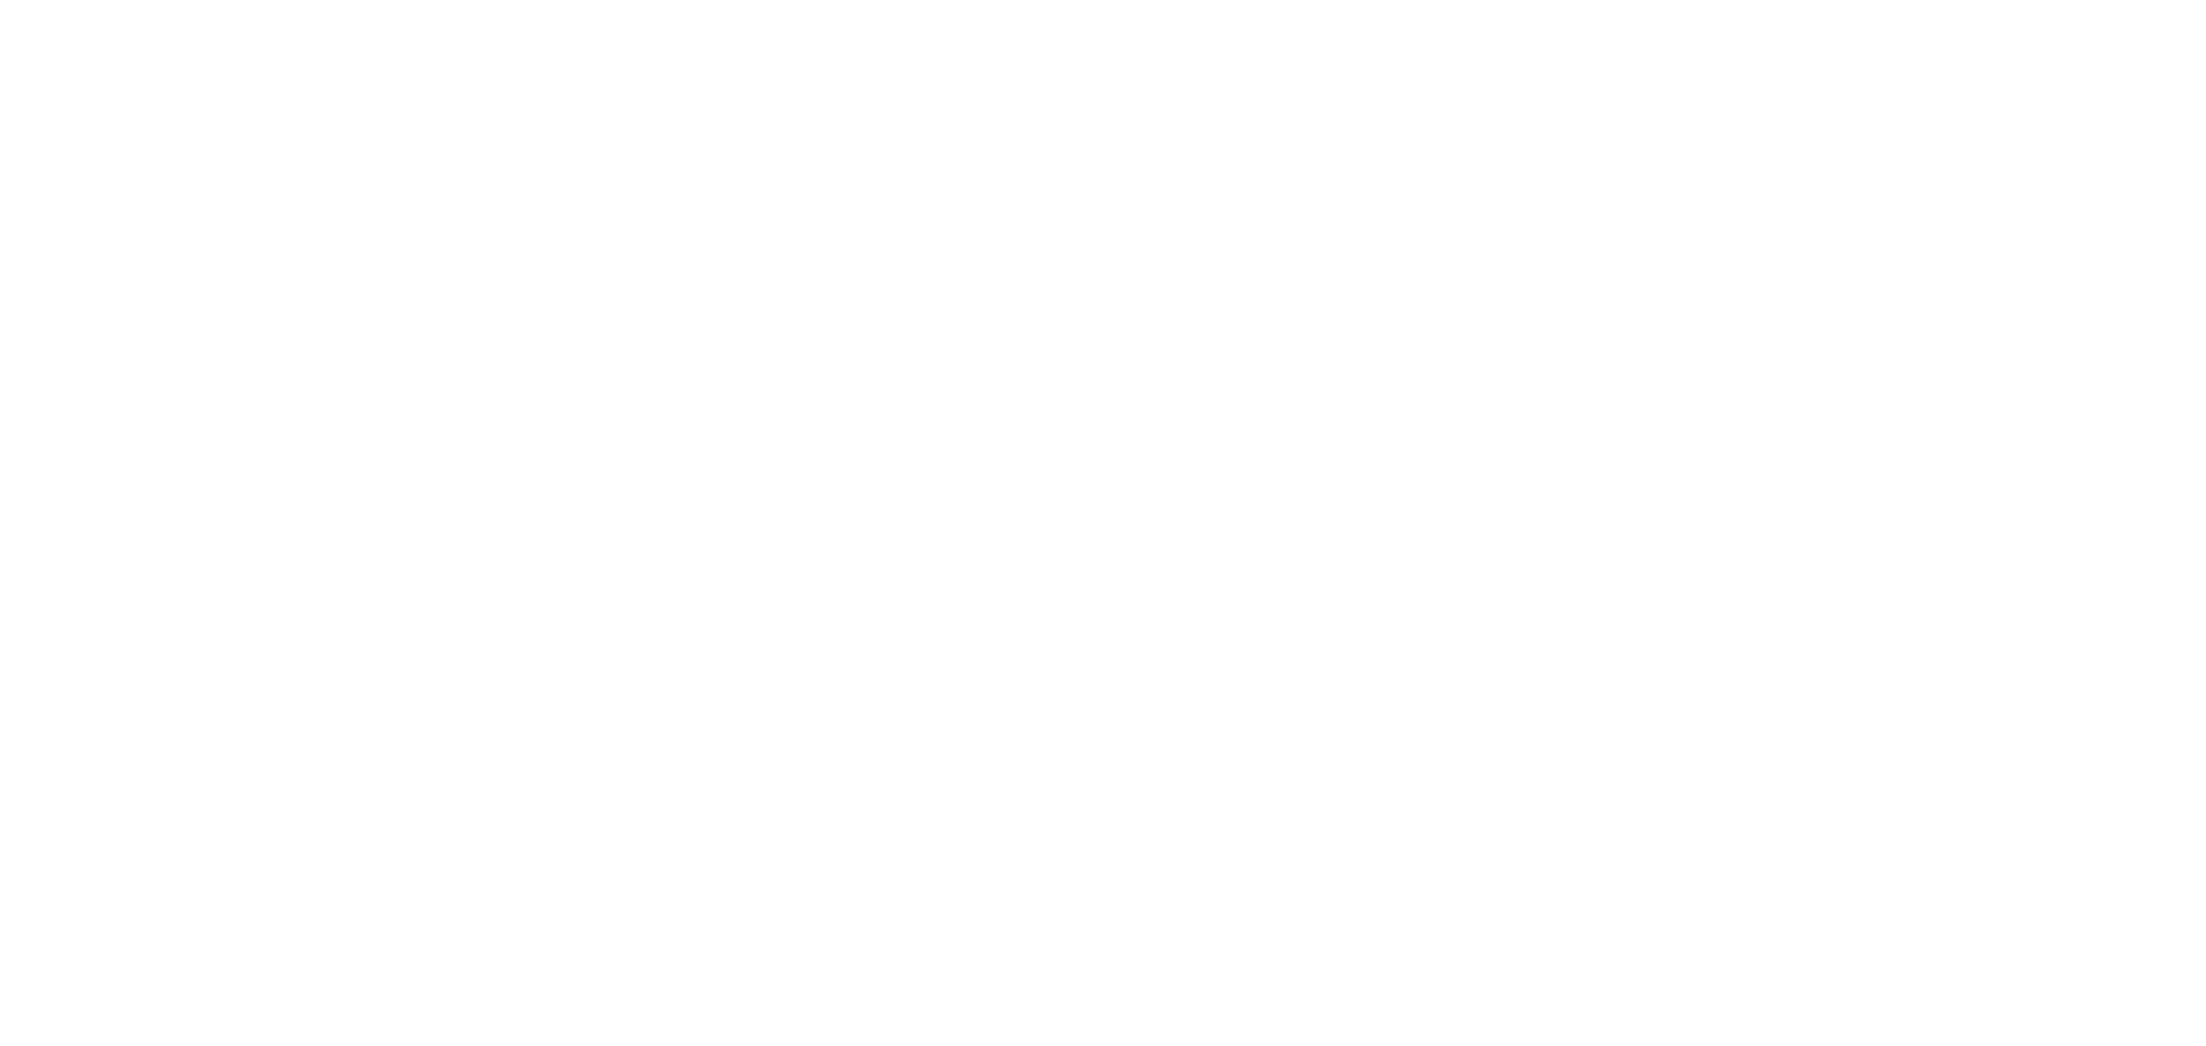 Madison Avenue Dental Studio